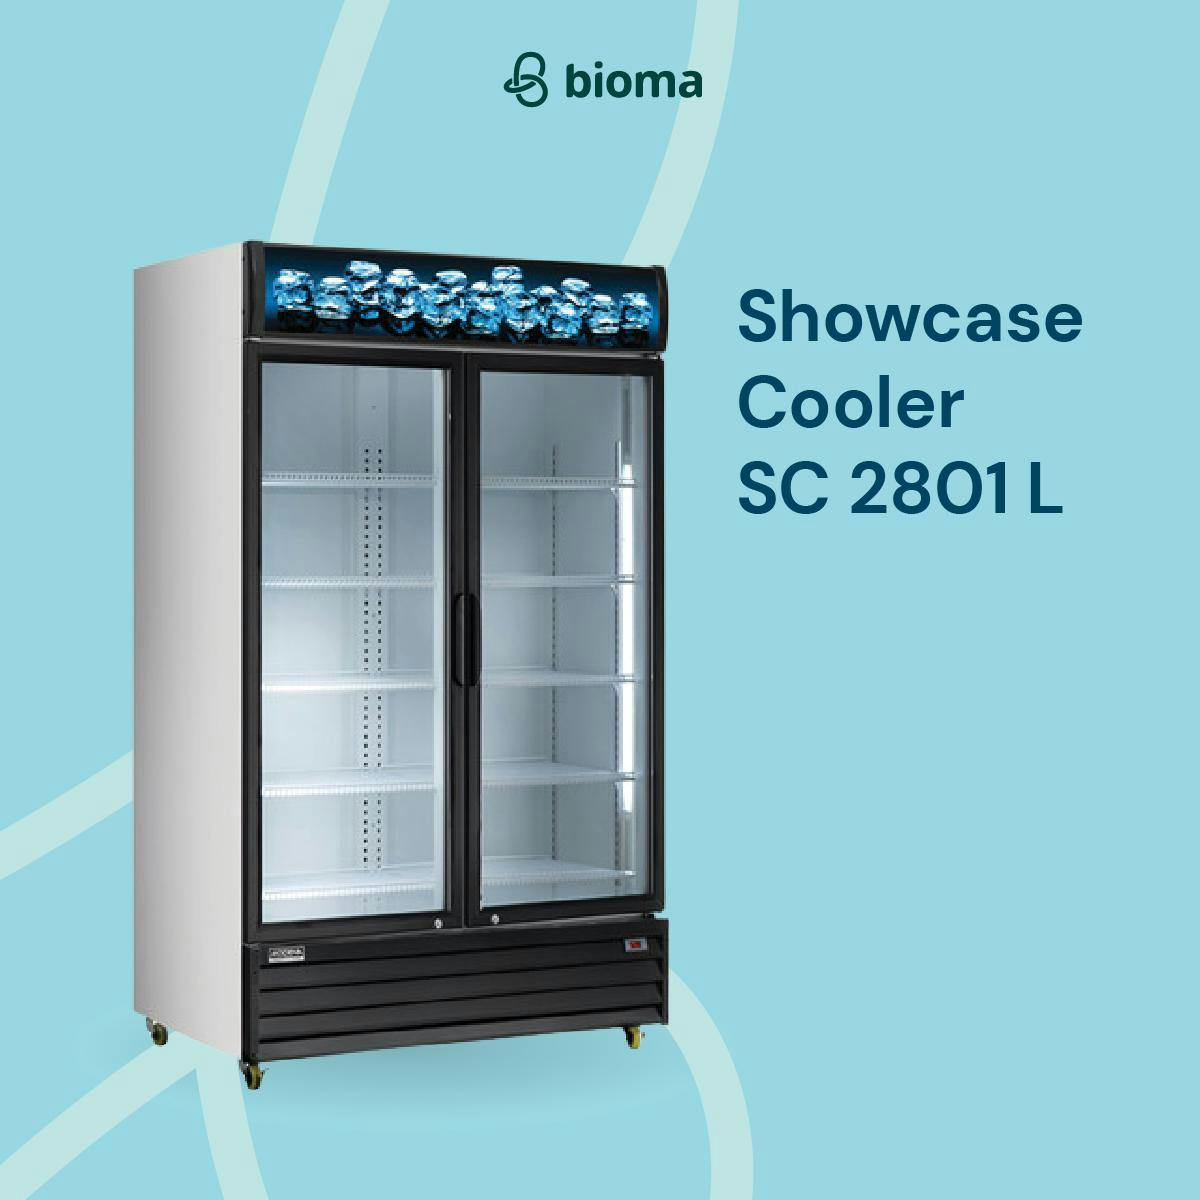 Showcase Cooler SC 2801 L